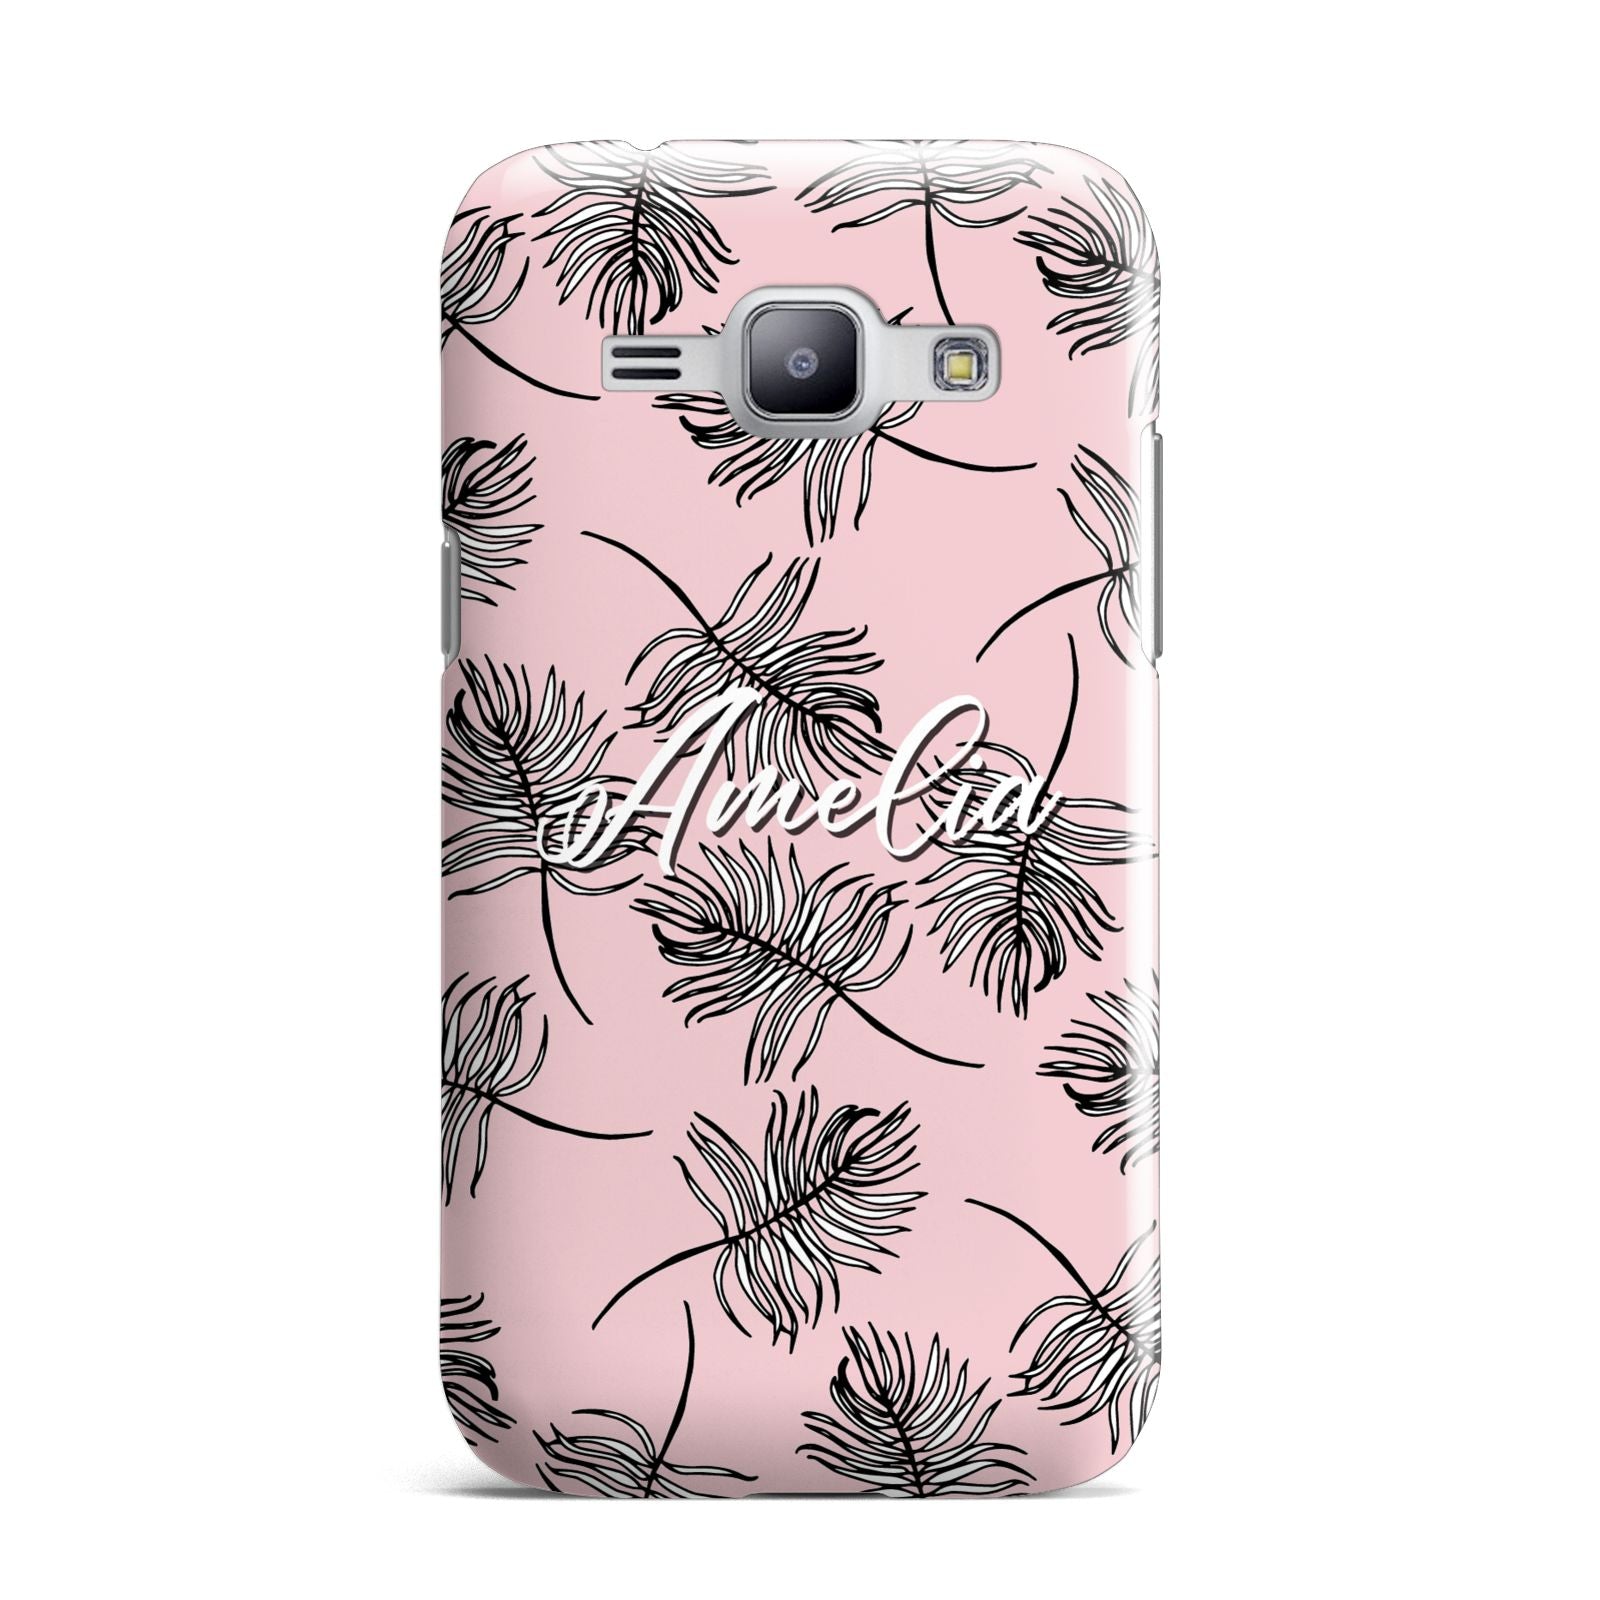 Personalised Pink Monochrome Tropical Leaf Samsung Galaxy J1 2015 Case